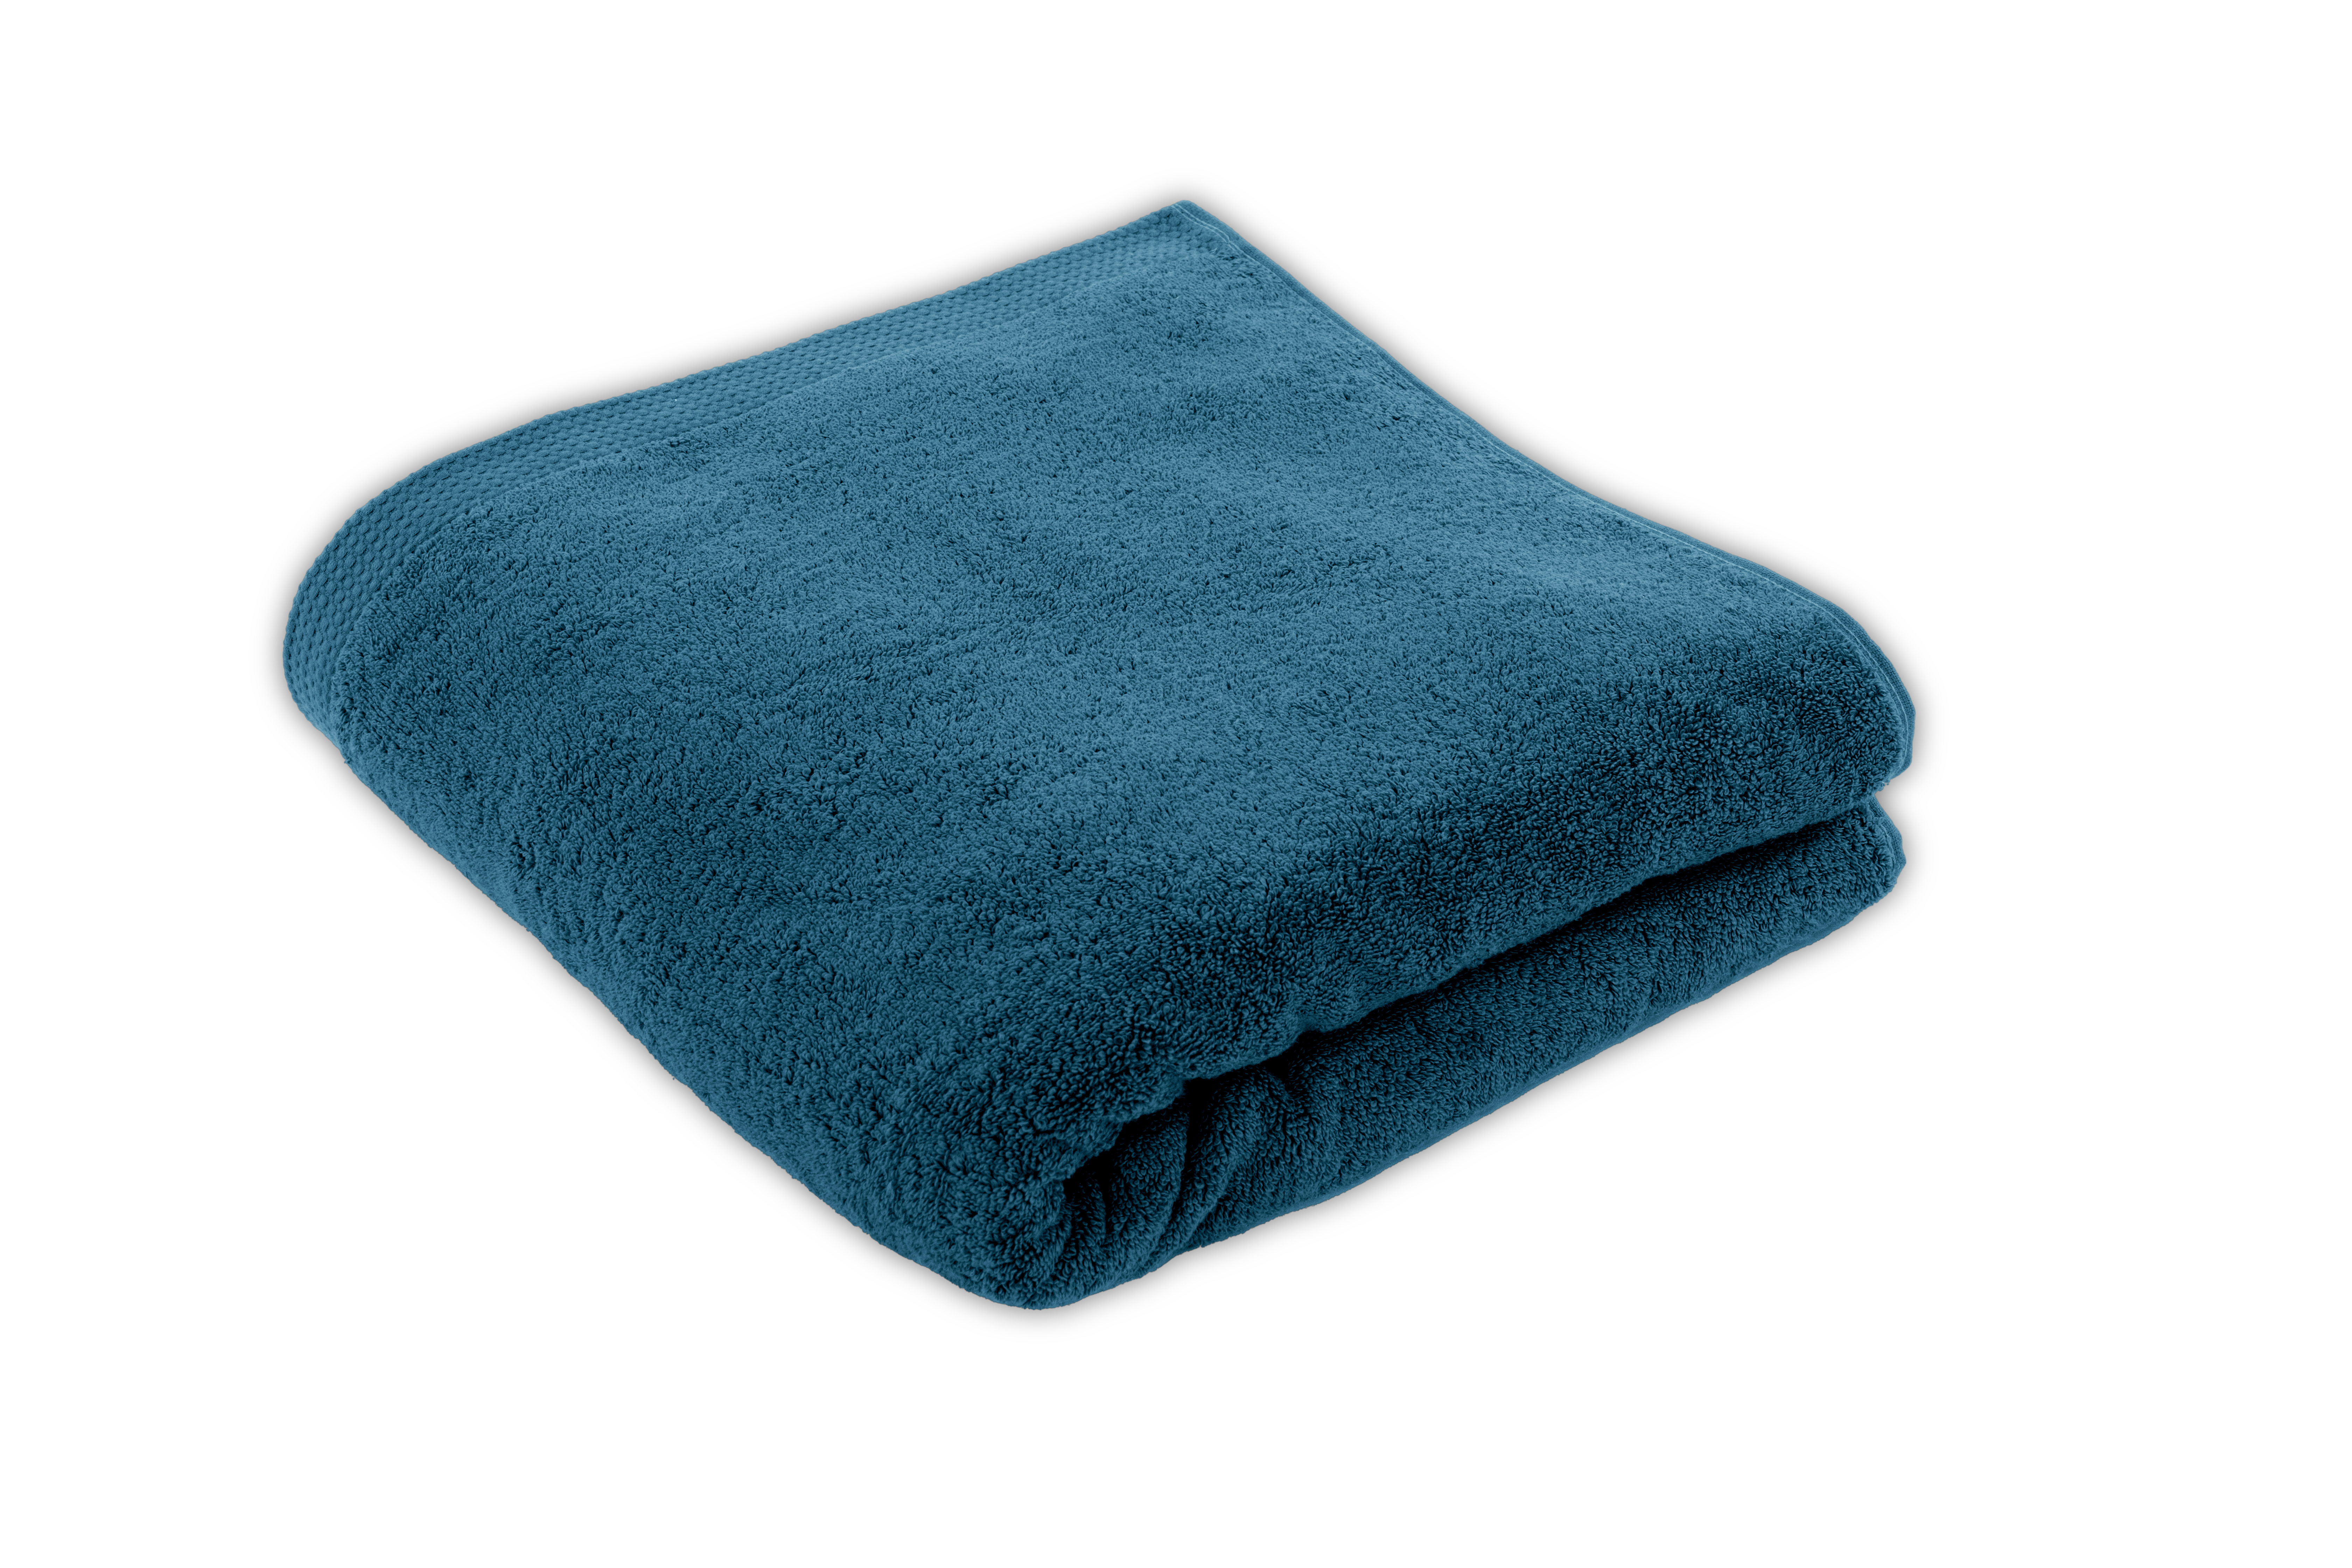 Shower towel DELUX 100x150cm, turquoise